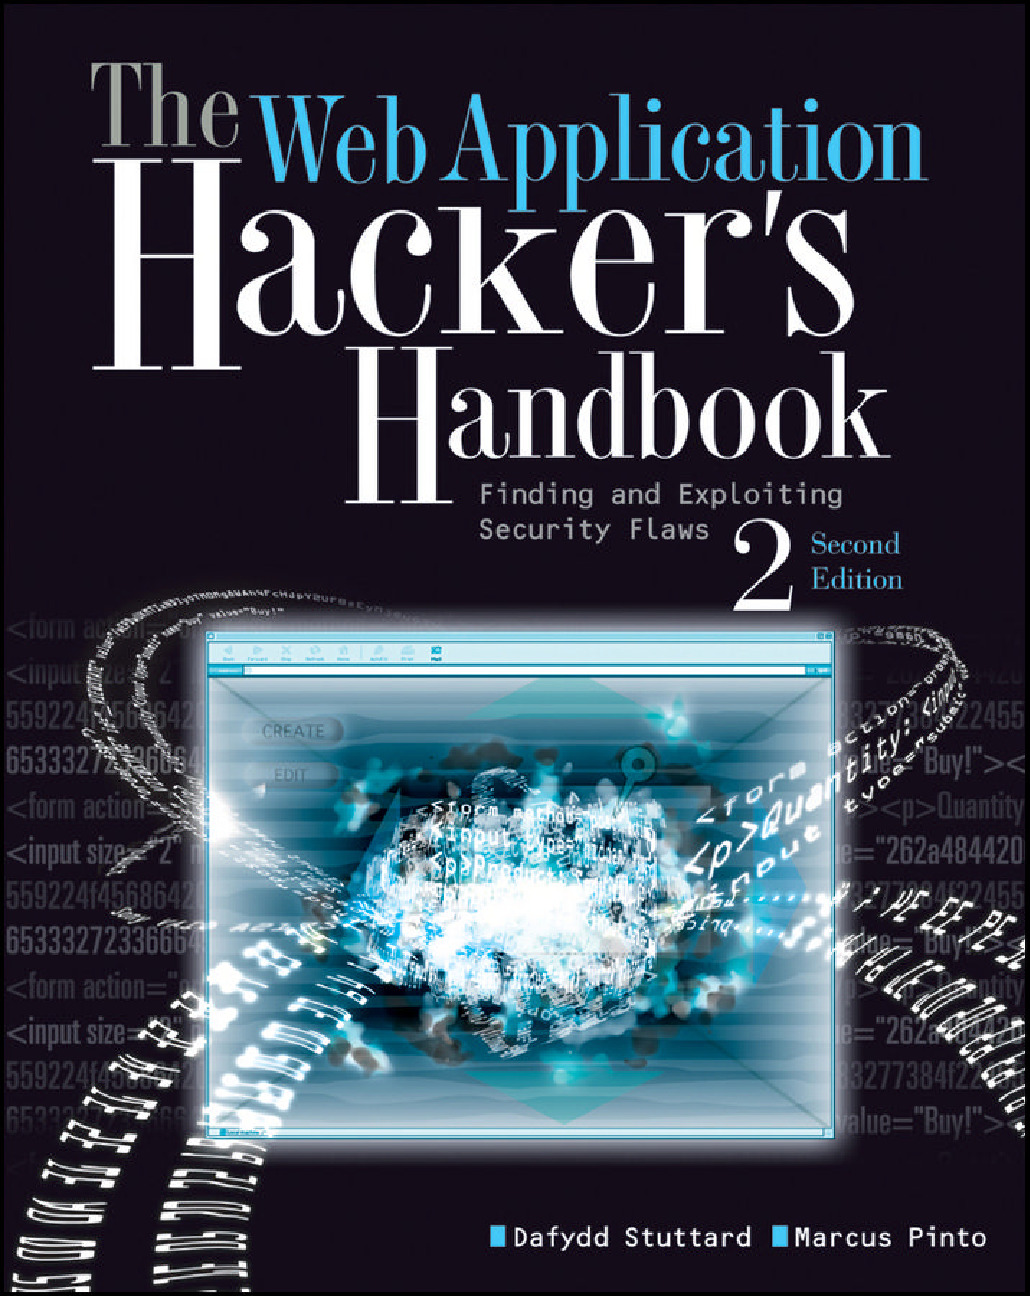 The Web Application Hackers Handbook